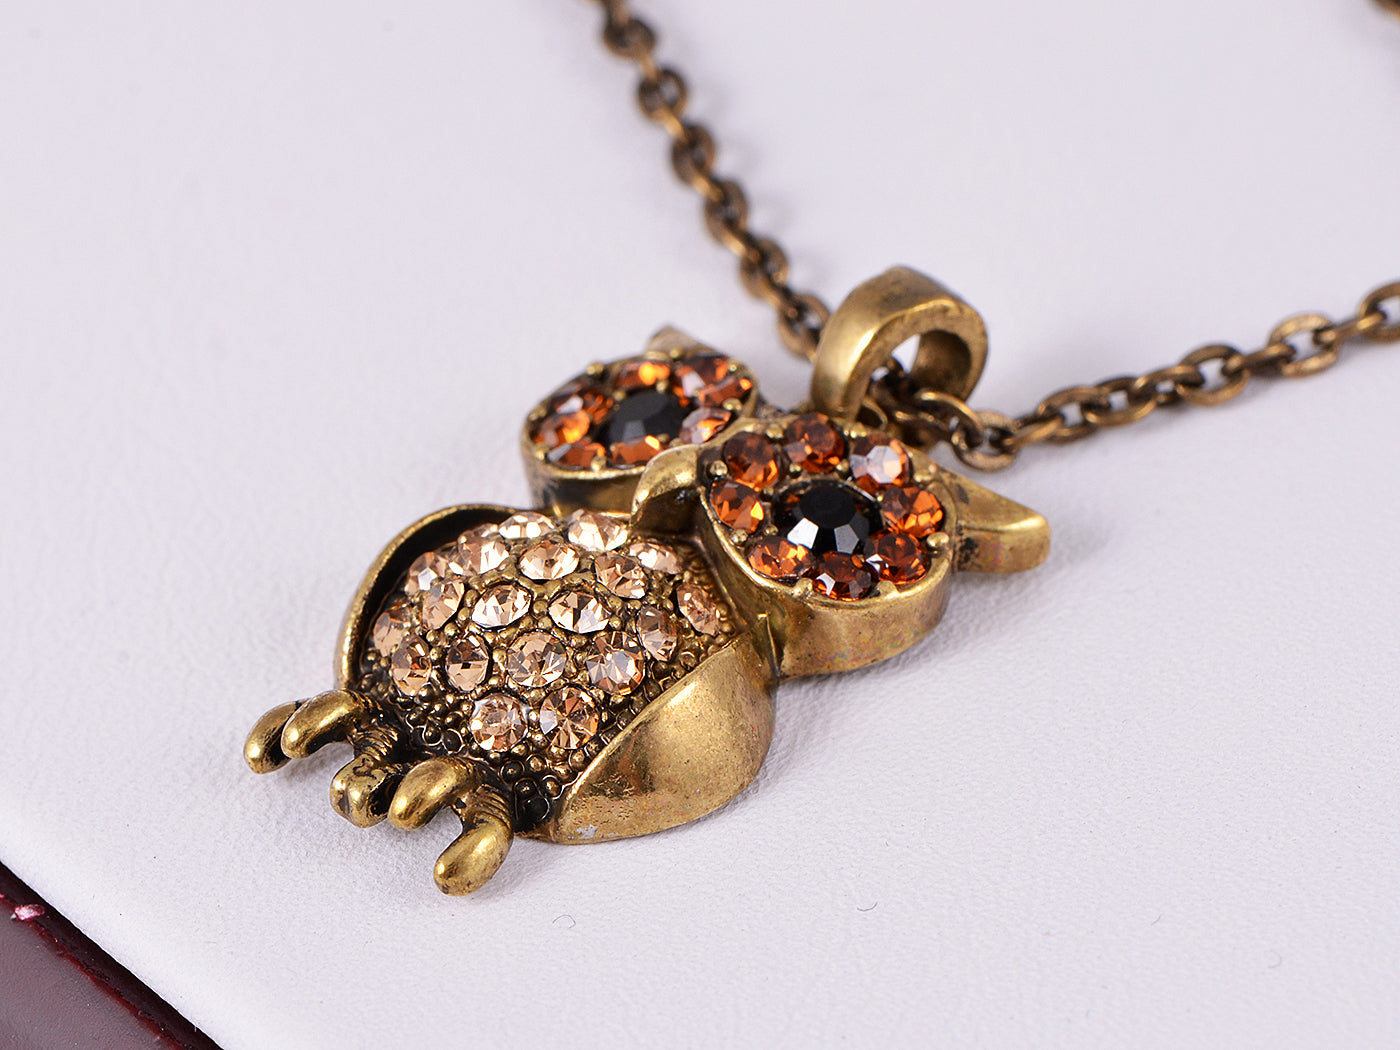 Topaz Curious Mr. Owl Big Eyed Pendant Necklace